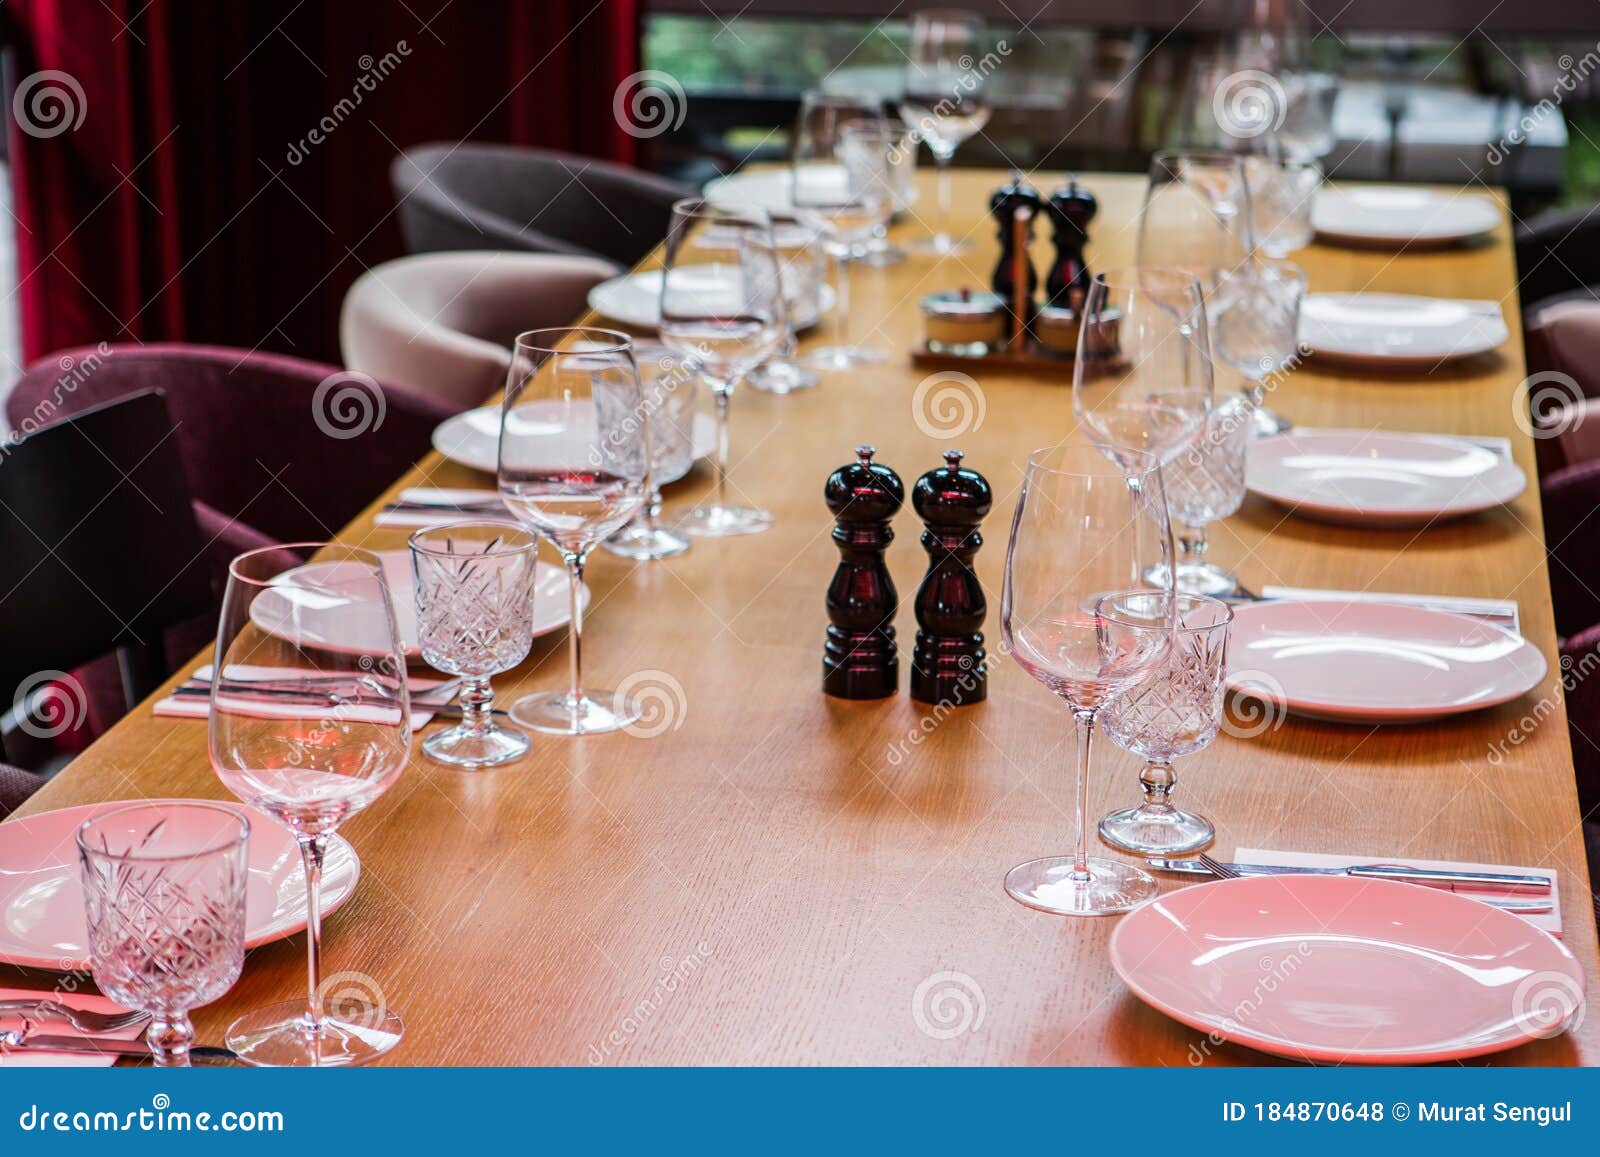 restaurant table , lux restaurant